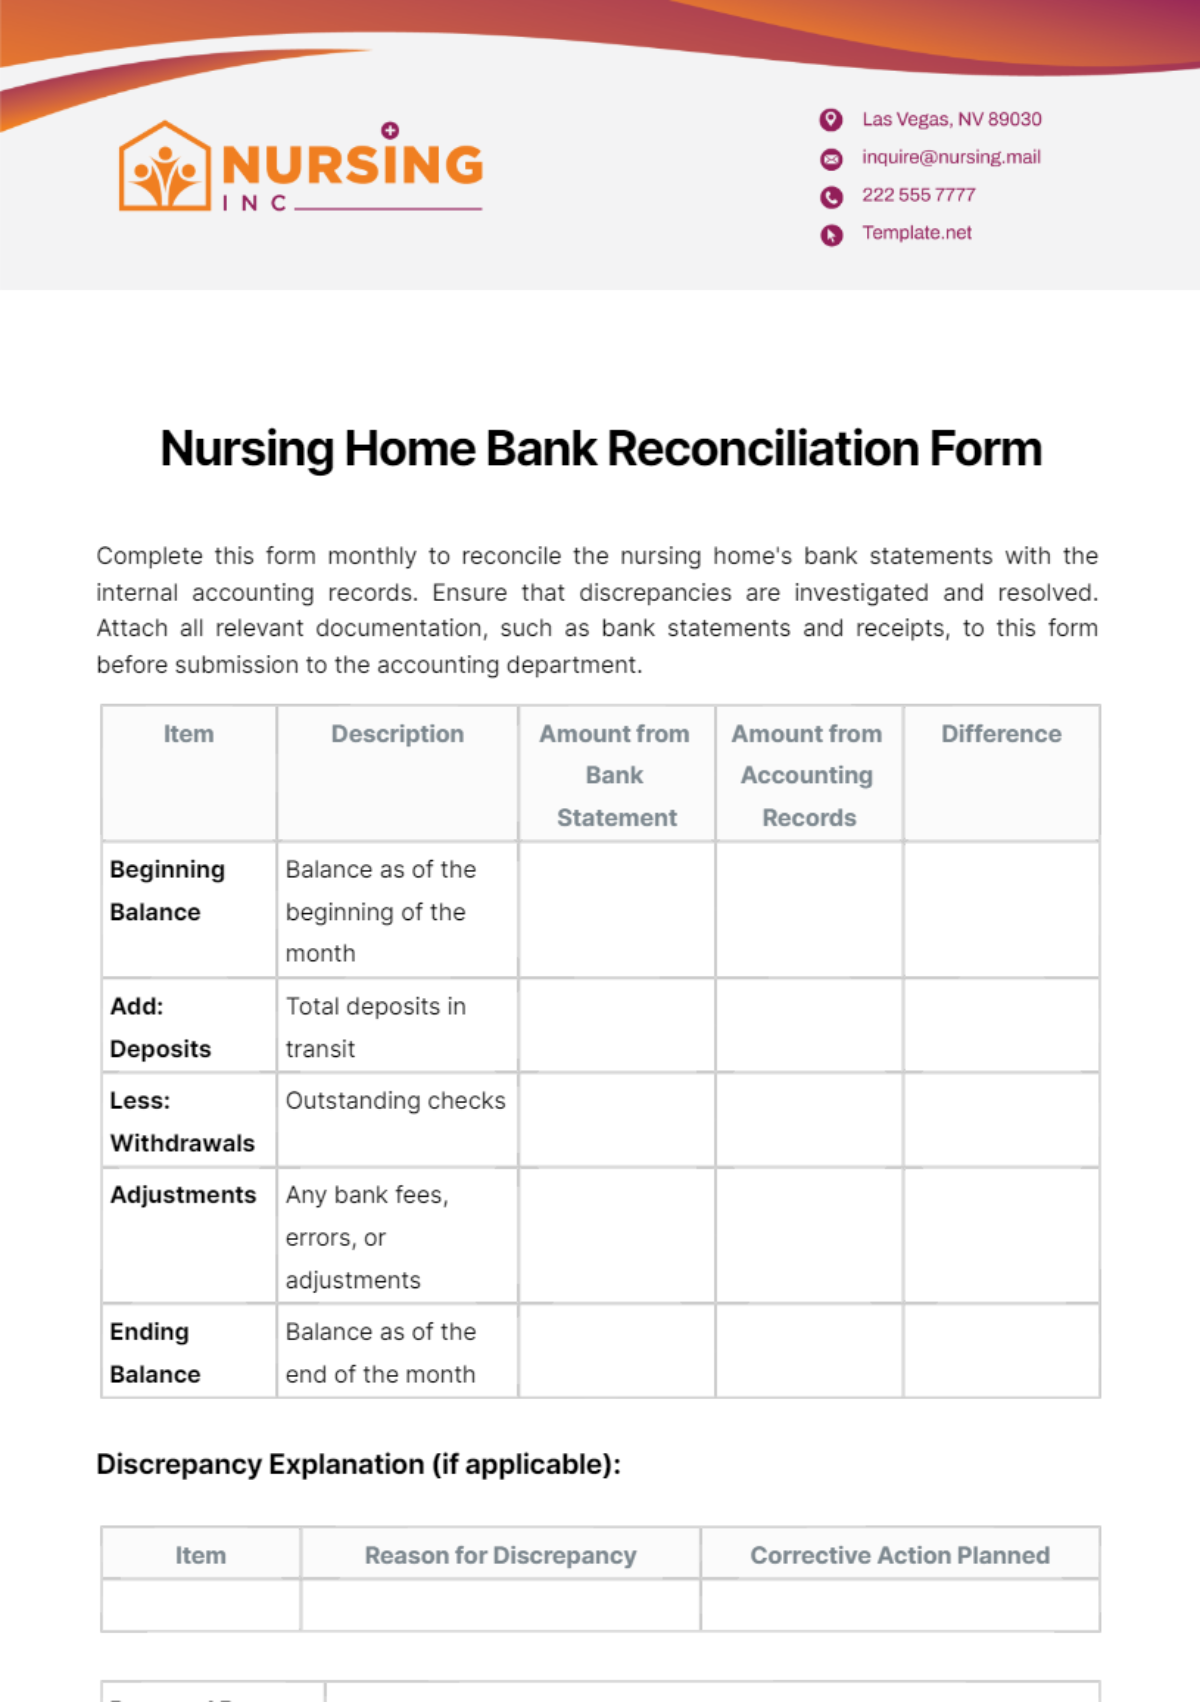 Free Nursing Home Bank Reconciliation Form Template